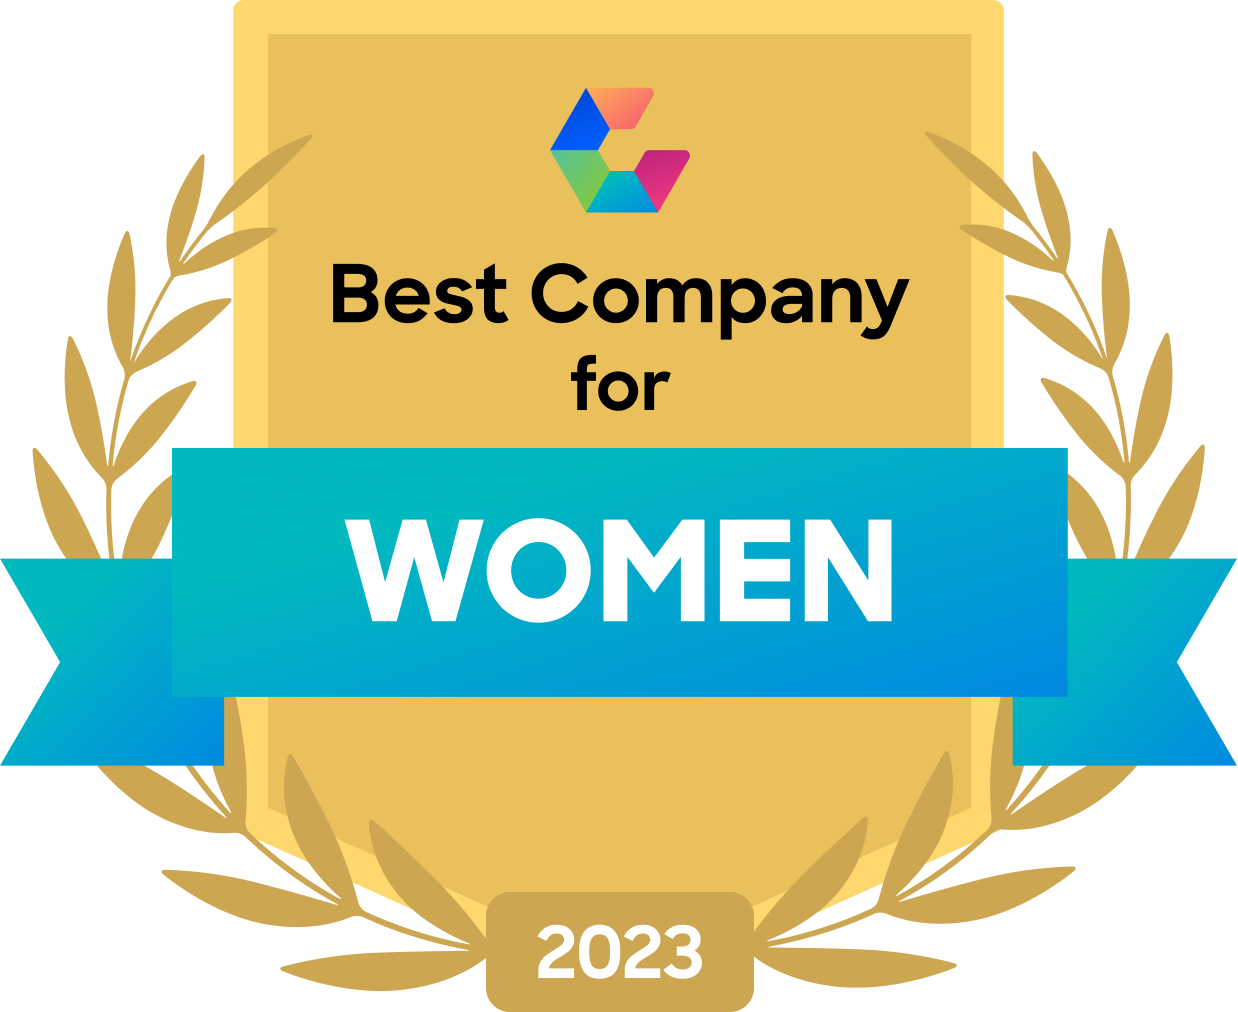 Best Company for Women Award 2023